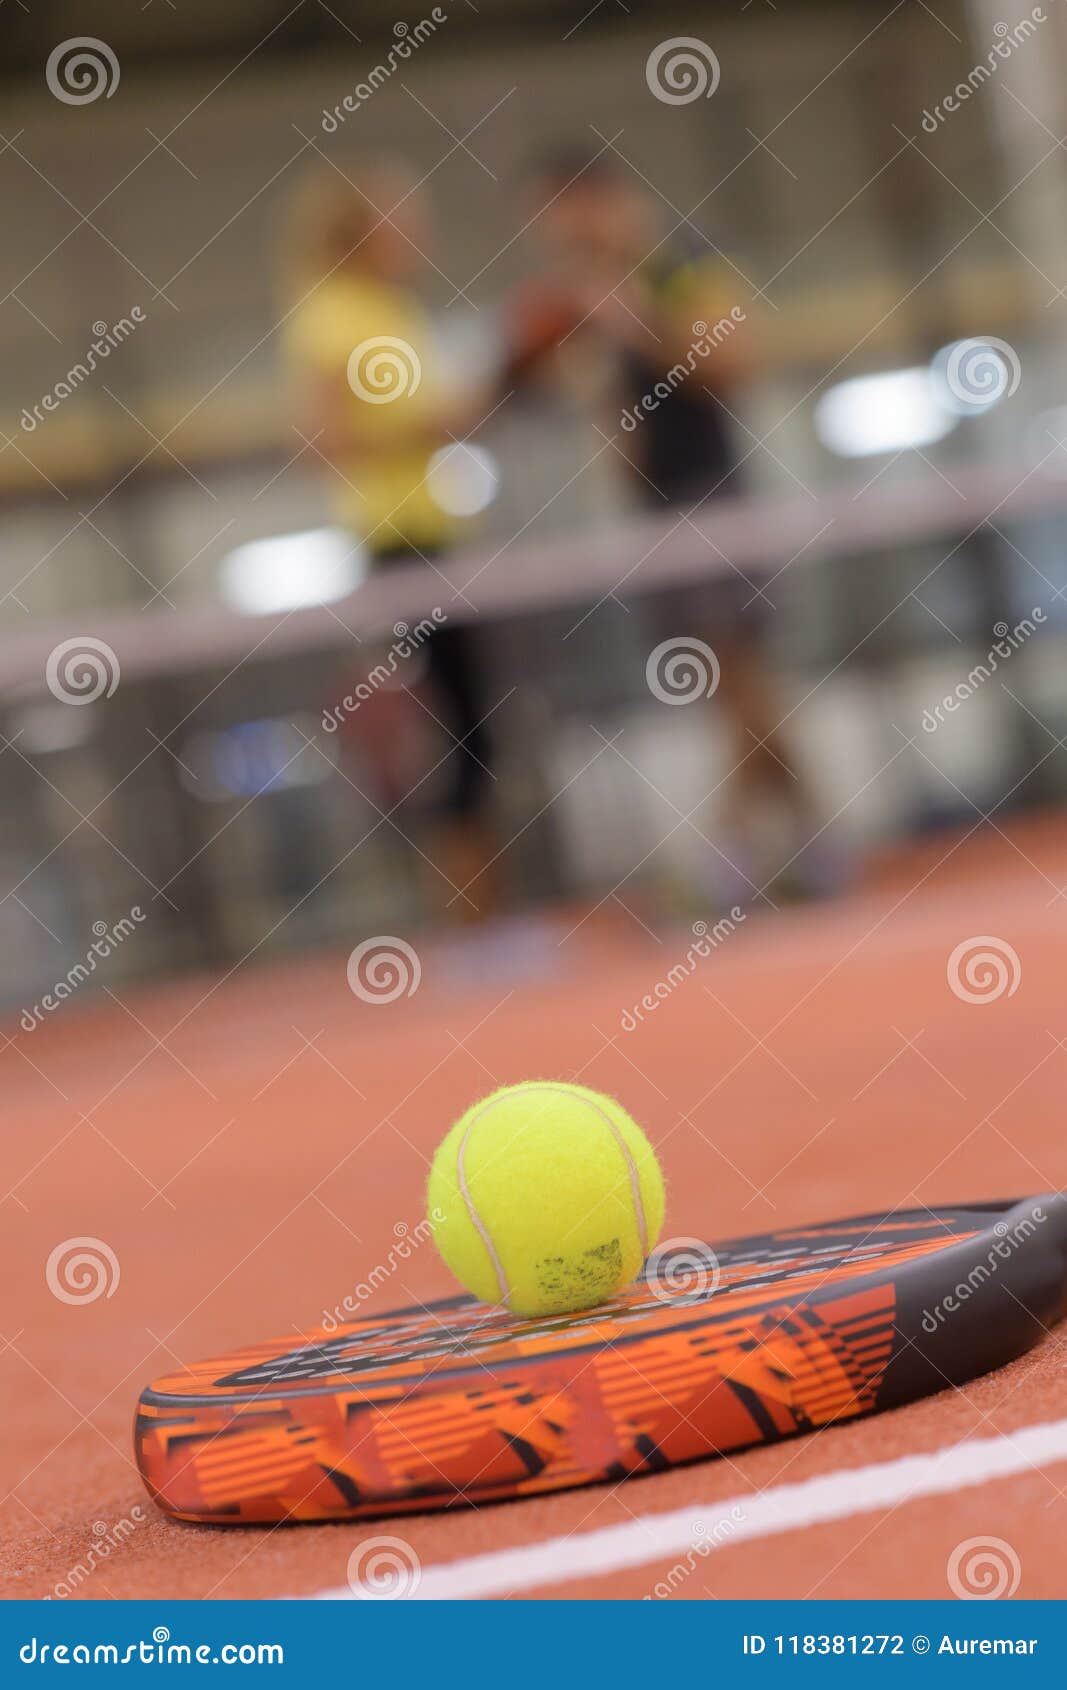 padel racket and ball